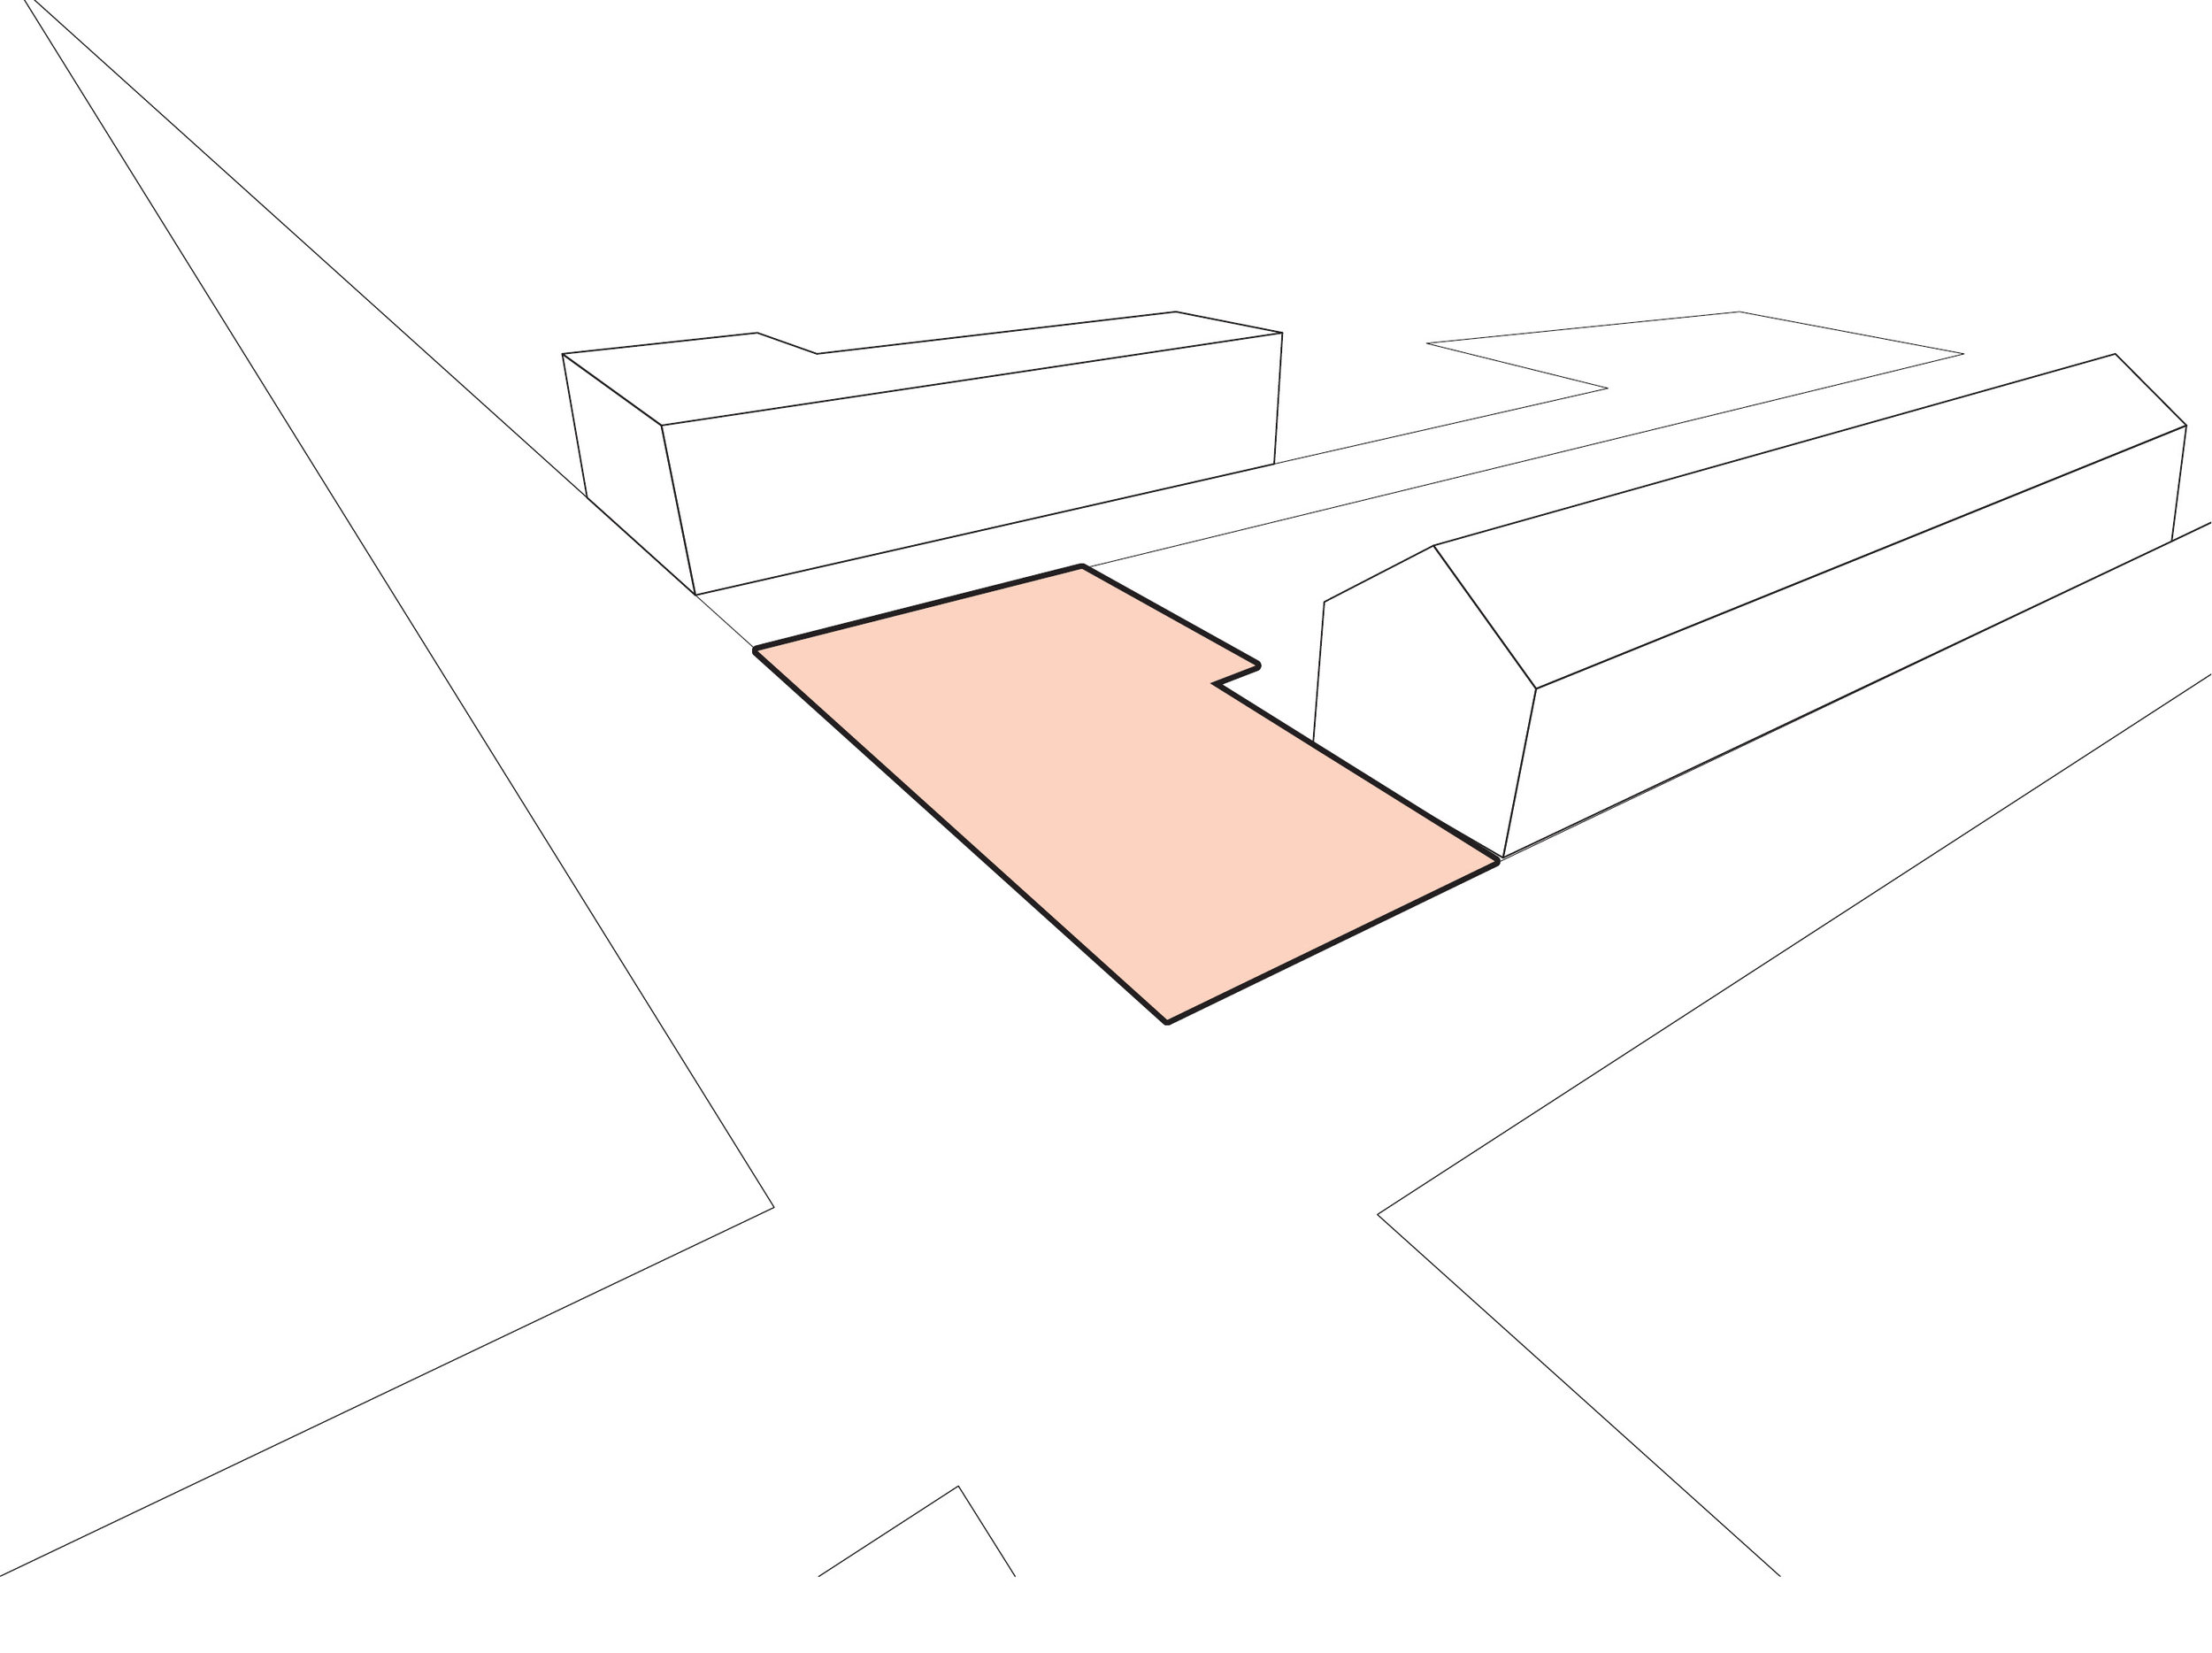 Personal-Architecture-nijmegen-appartementencomplex-1.jpg